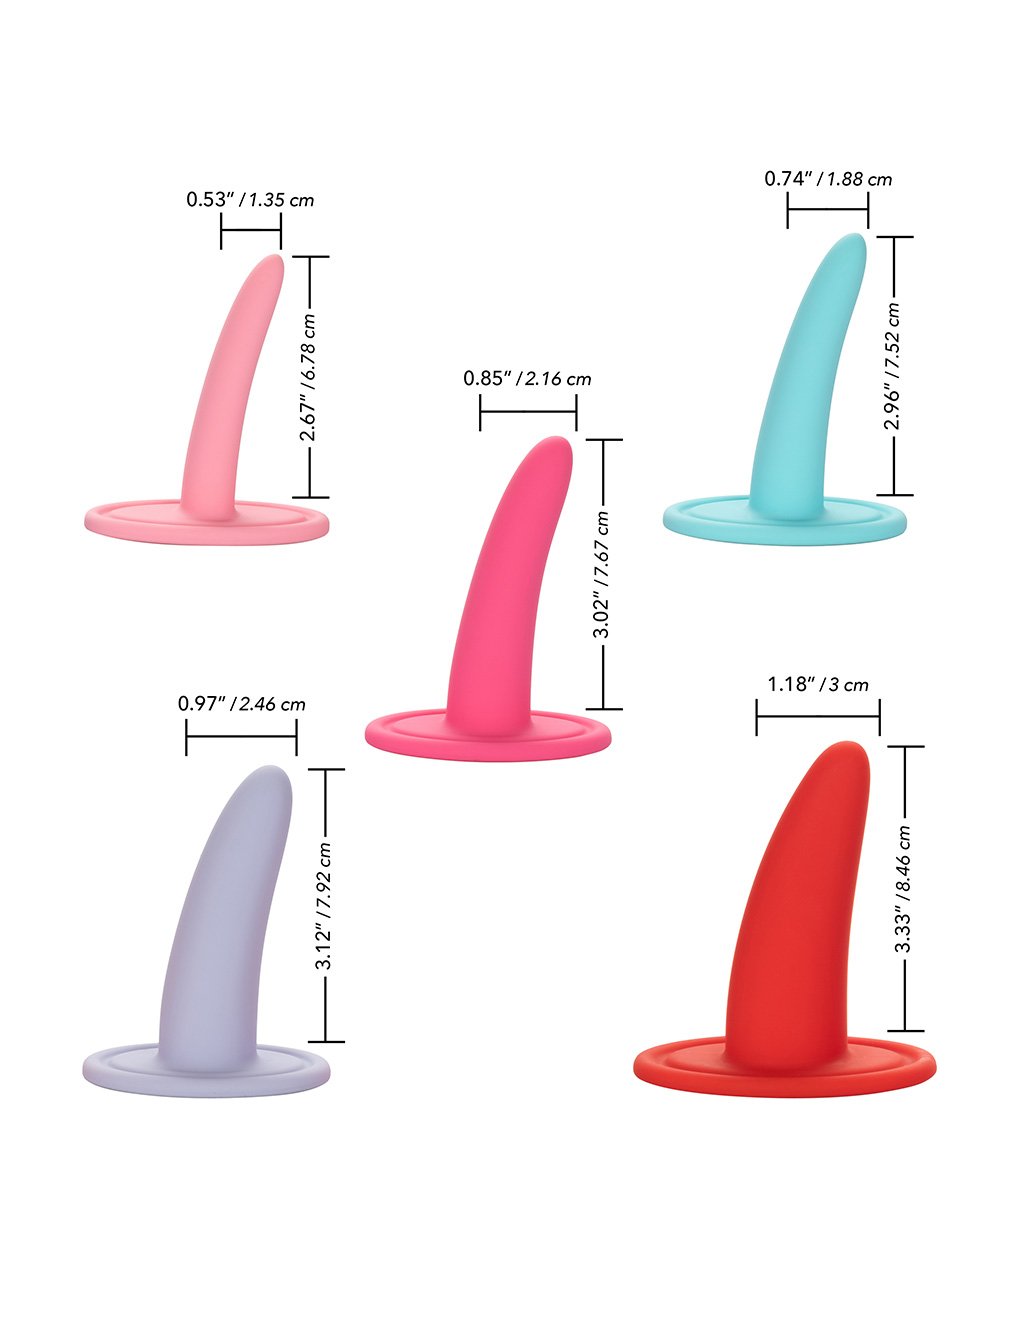 She-Ology 5 Piece Vaginal Dilator Set- Sizing